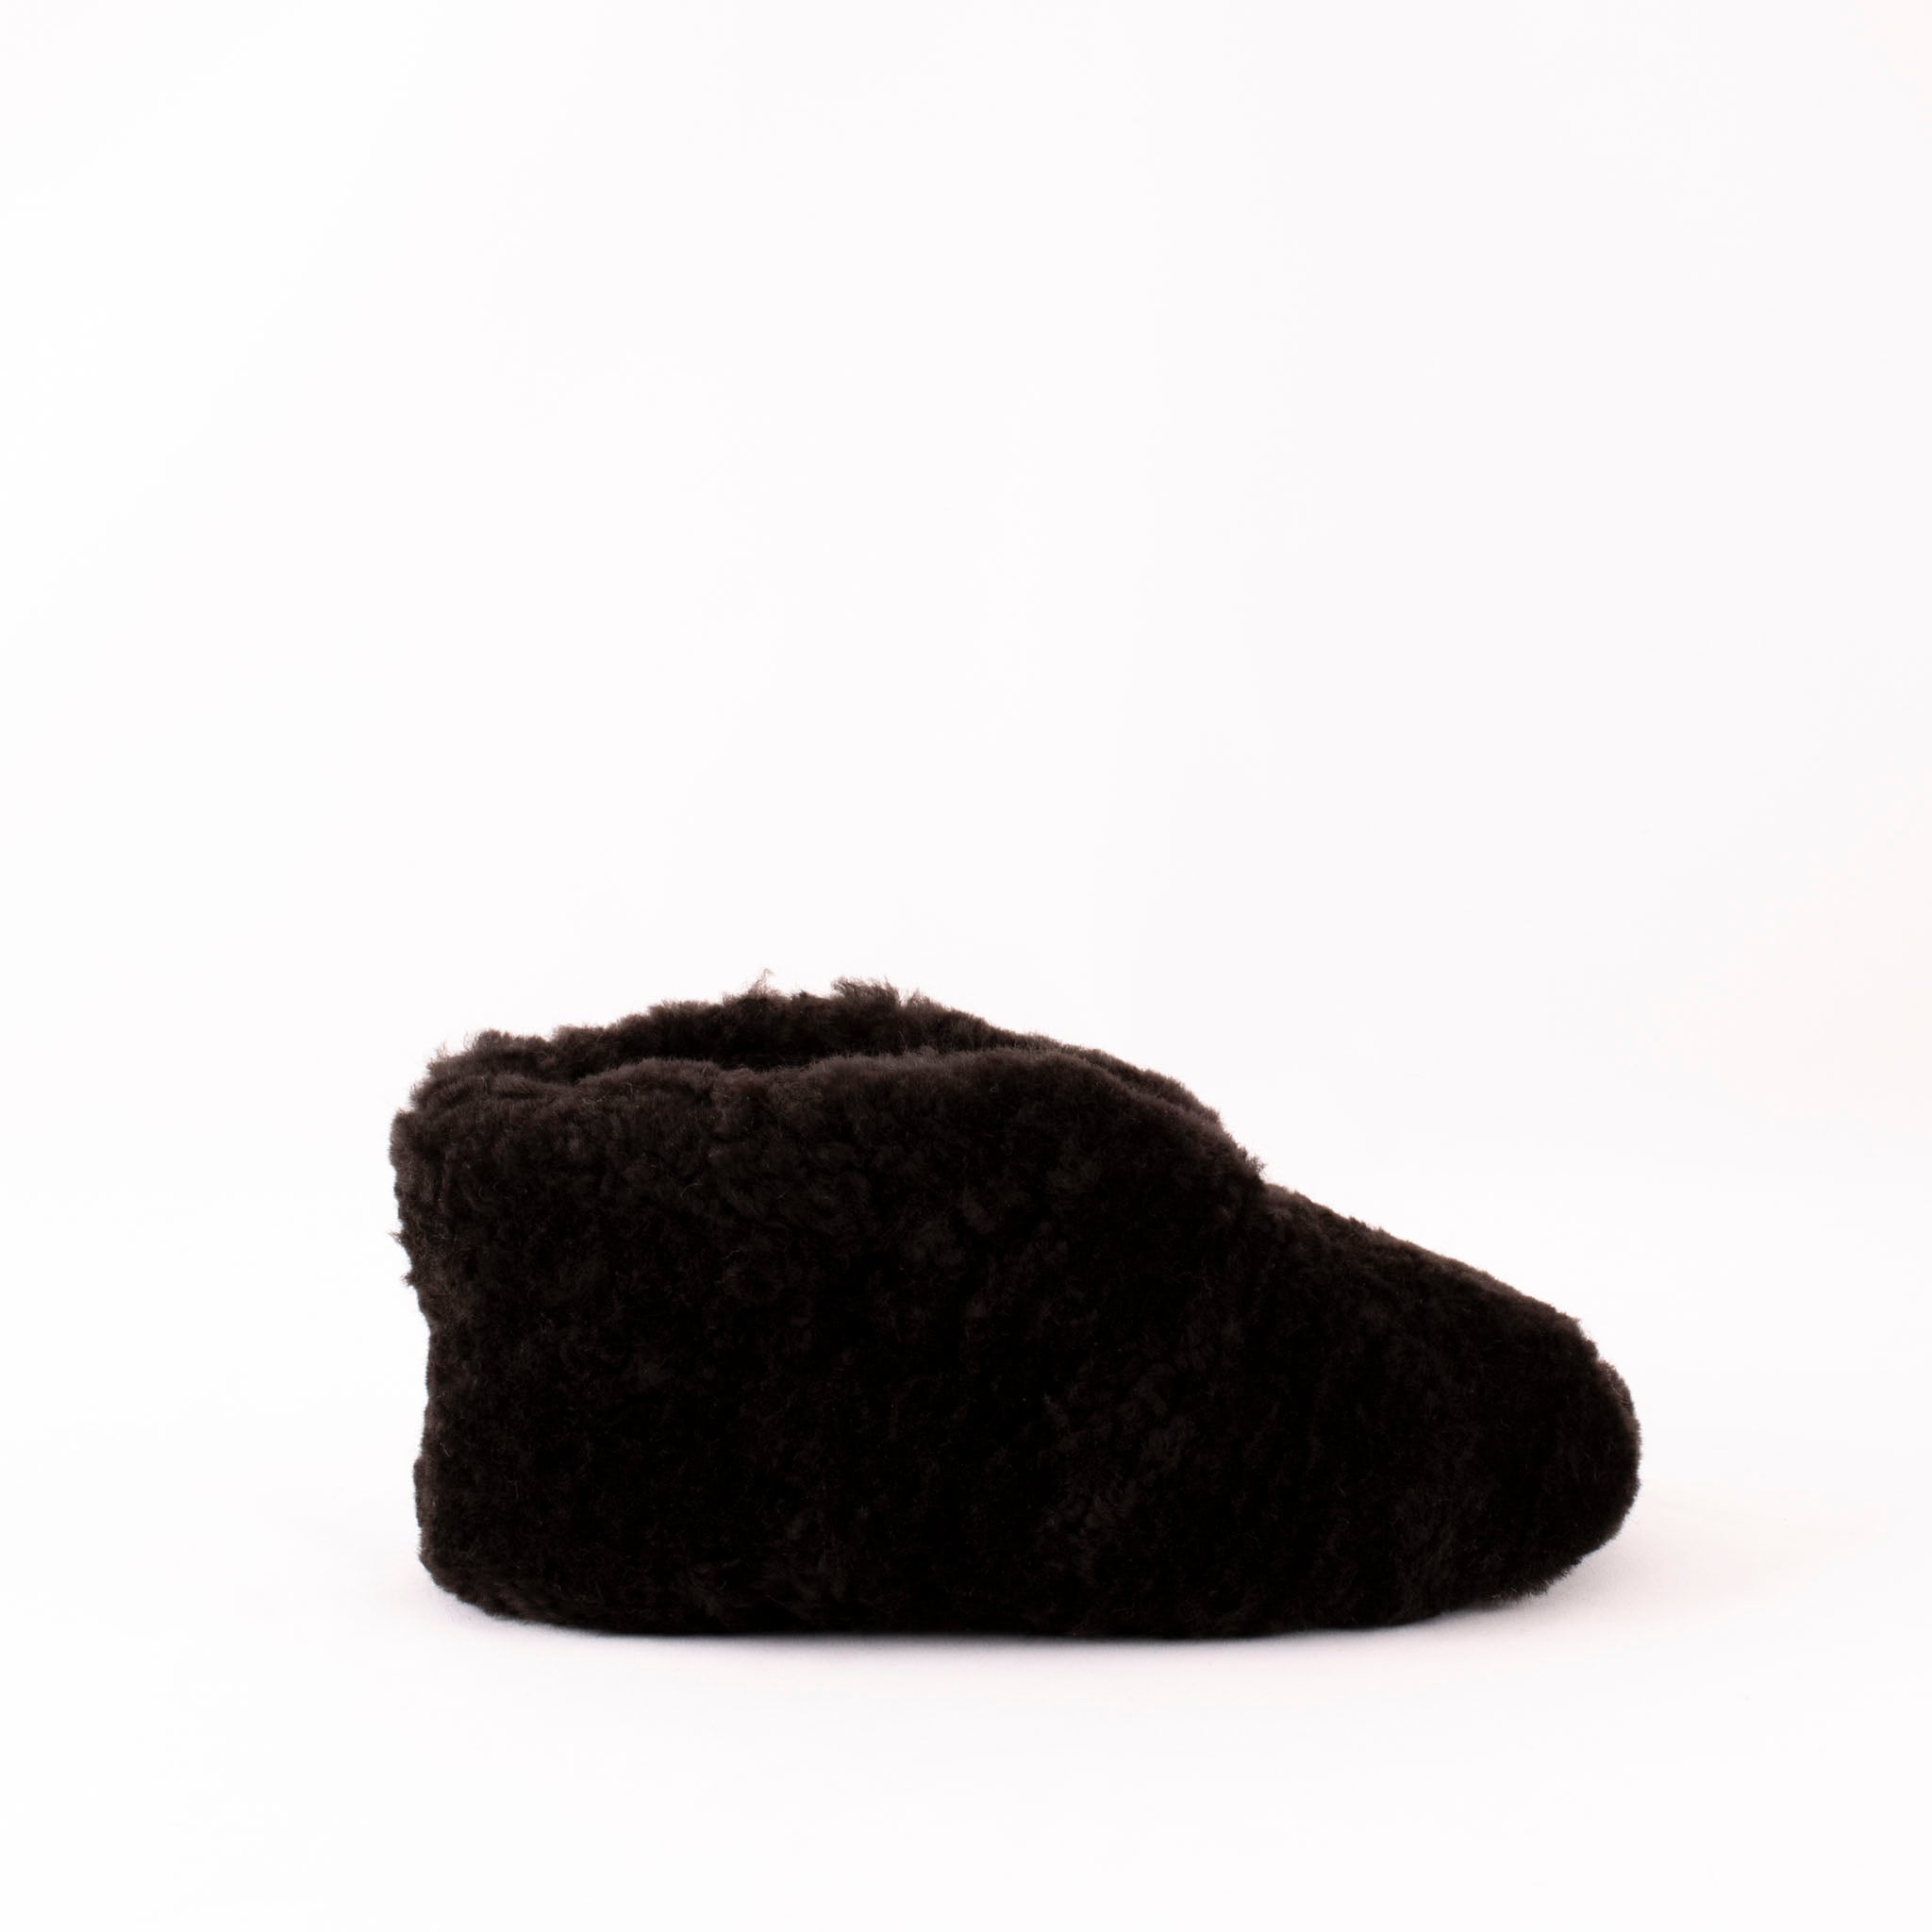 Shepherd Ulla are a pair of soft ankel high sheepskin slippers.